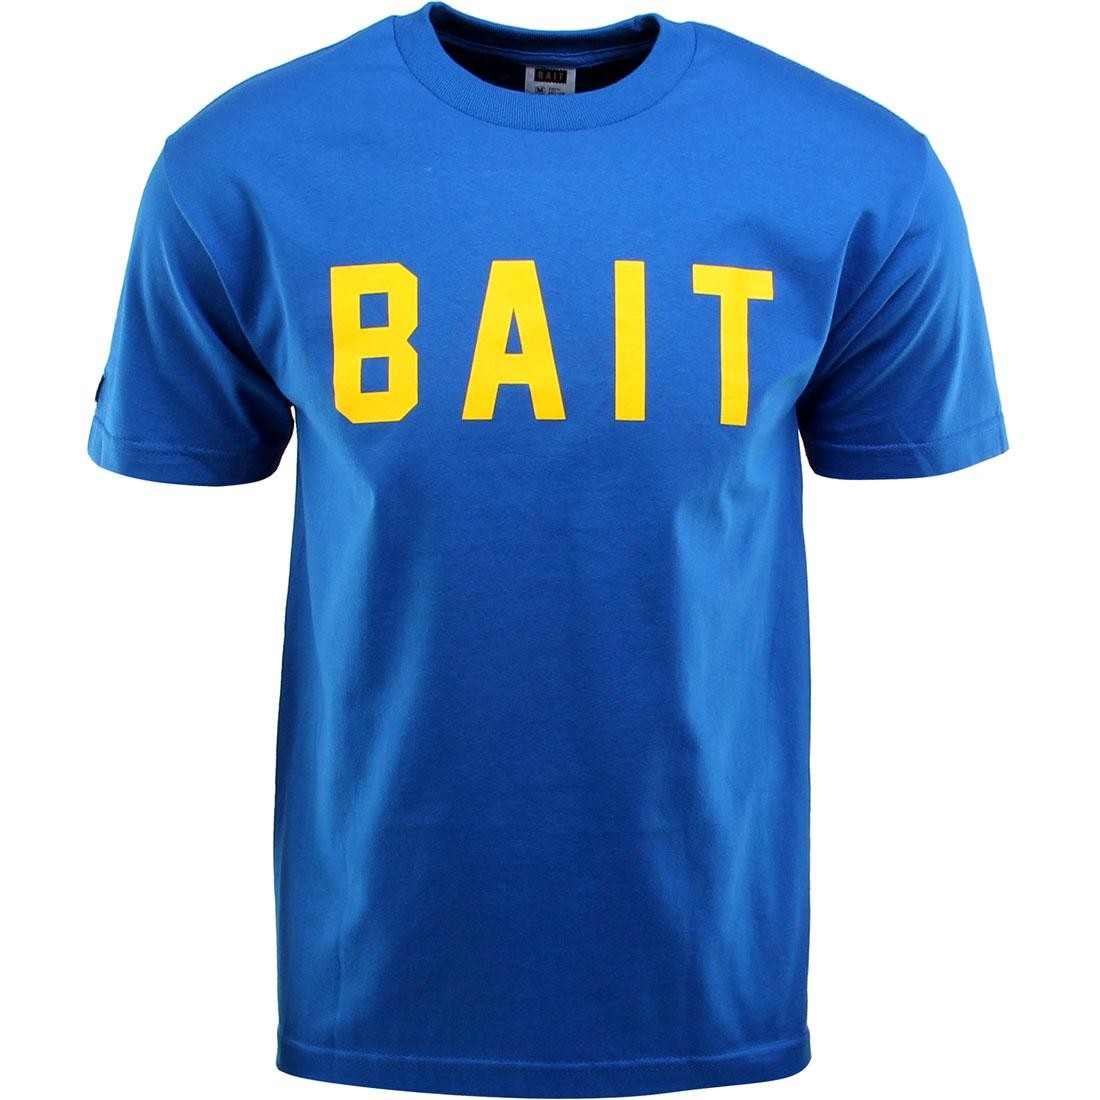 BAIT Logo Tee (blue / royal blue / yellow)